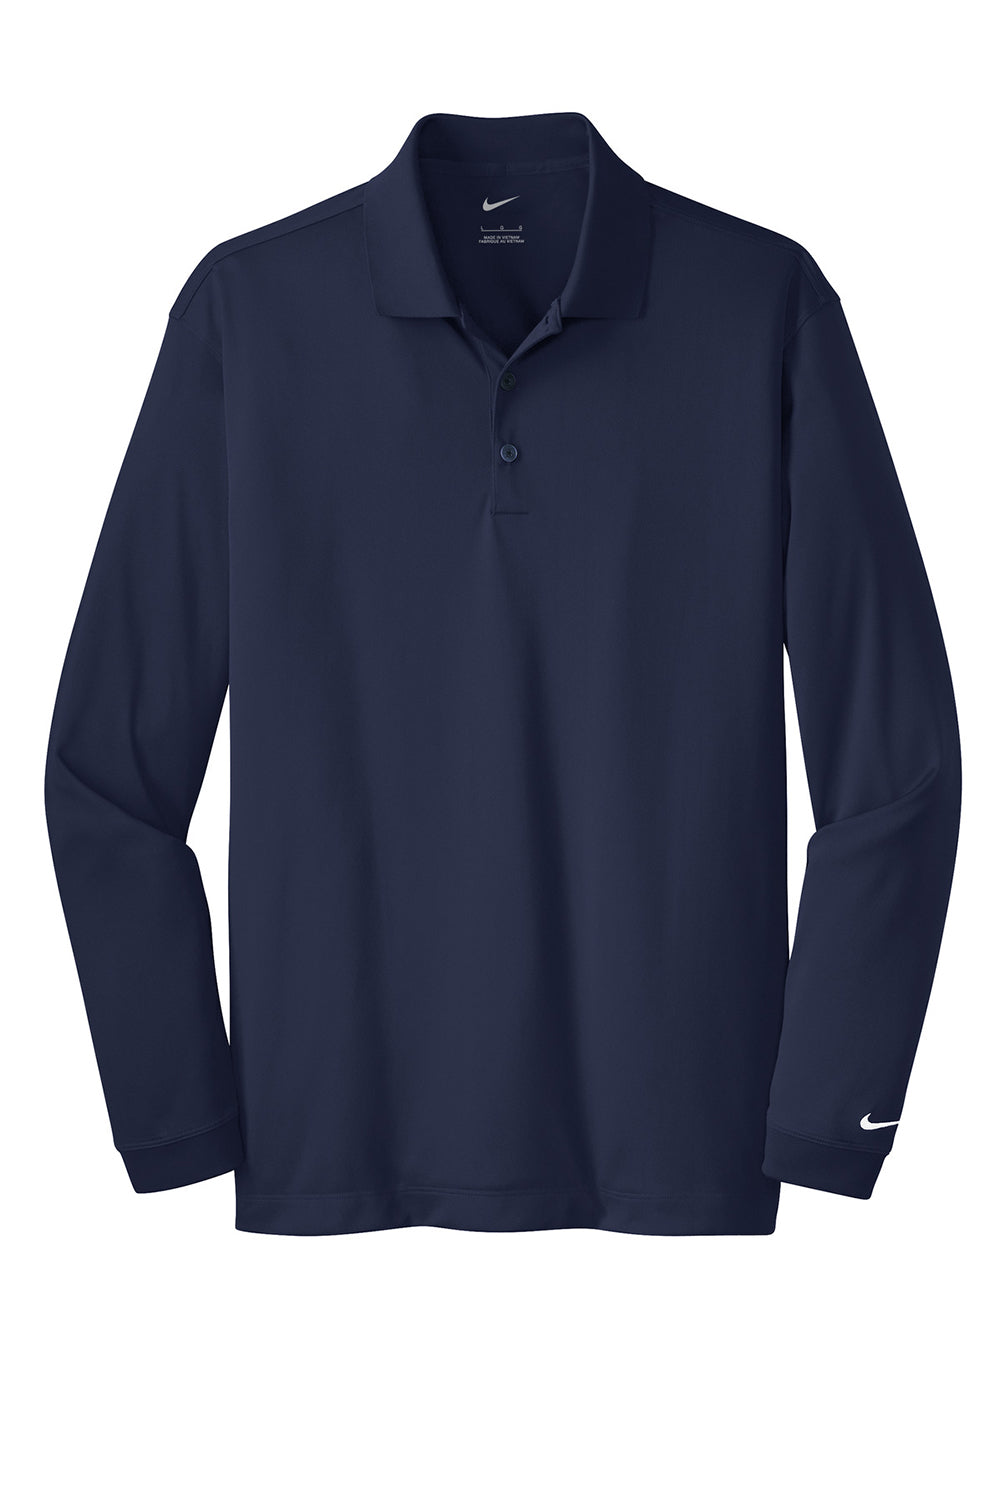 Nike 466364/604940 Mens Stretch Tech Dri-Fit Moisture Wicking Long Sleeve Polo Shirt Midnight Navy Blue Flat Front